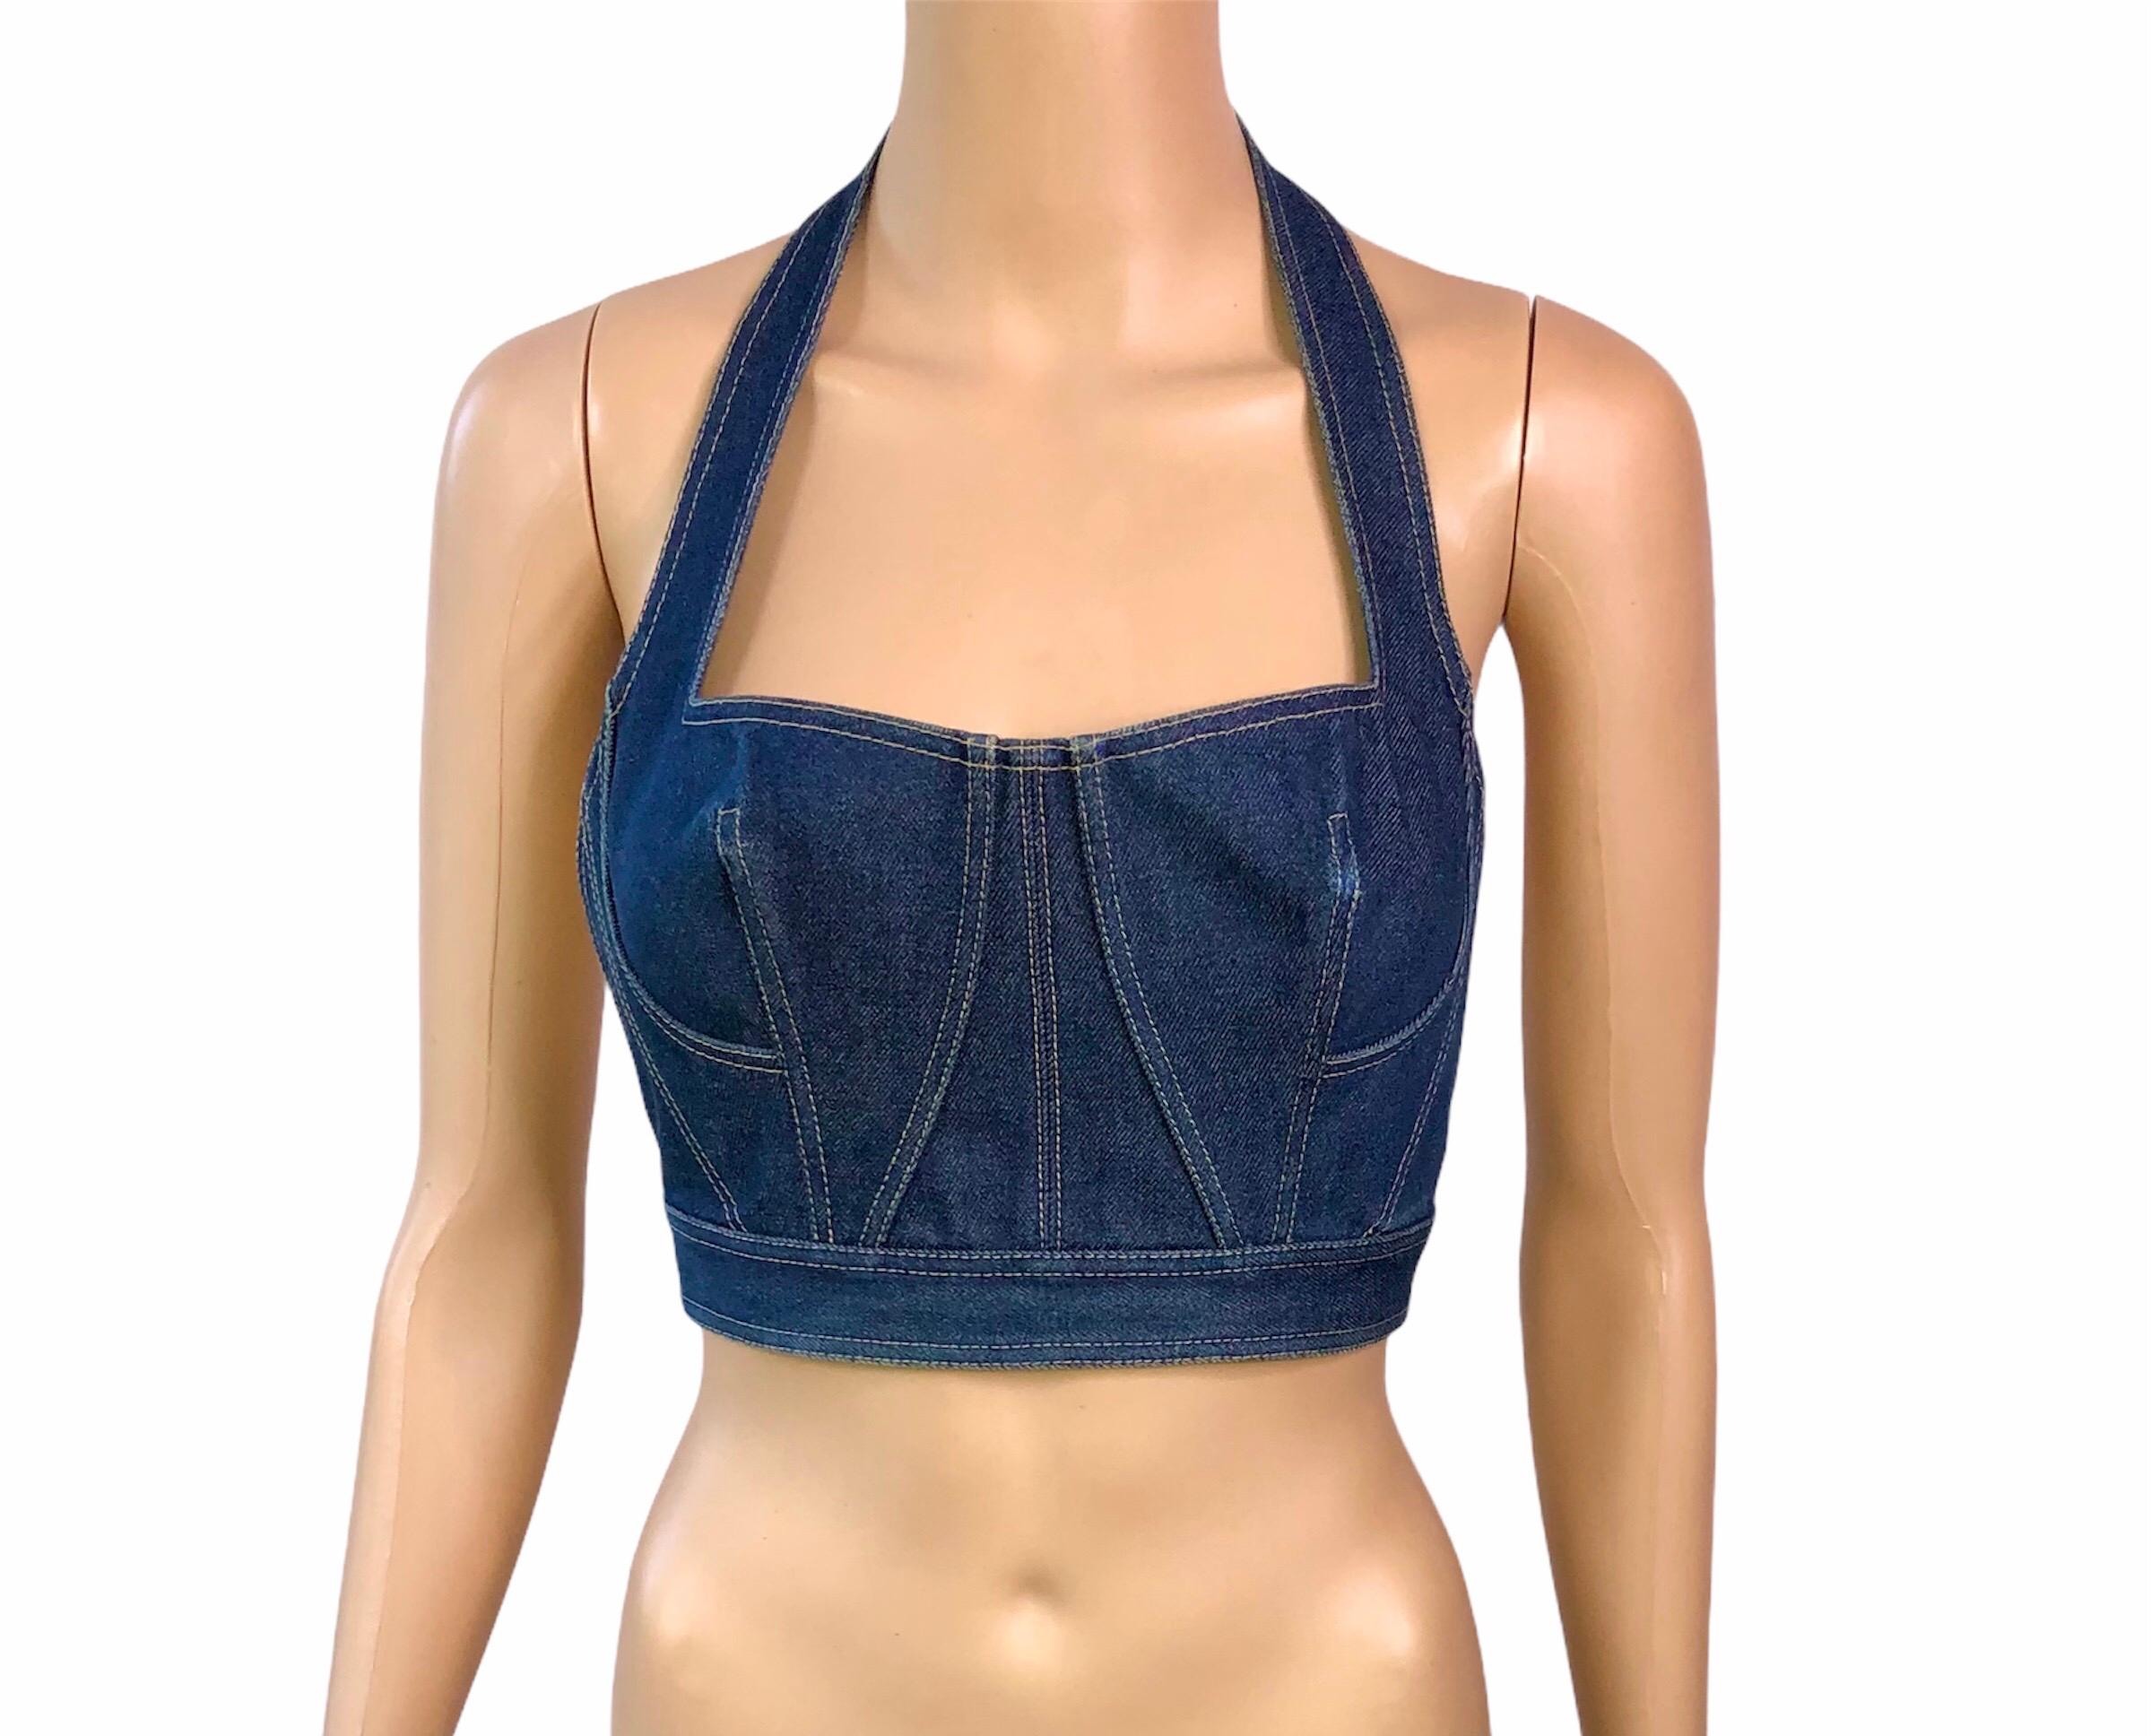 Women's Azzedine Alaia S/S 1991 Runway Vintage Blue Denim Backless Bra Bralette Crop Top